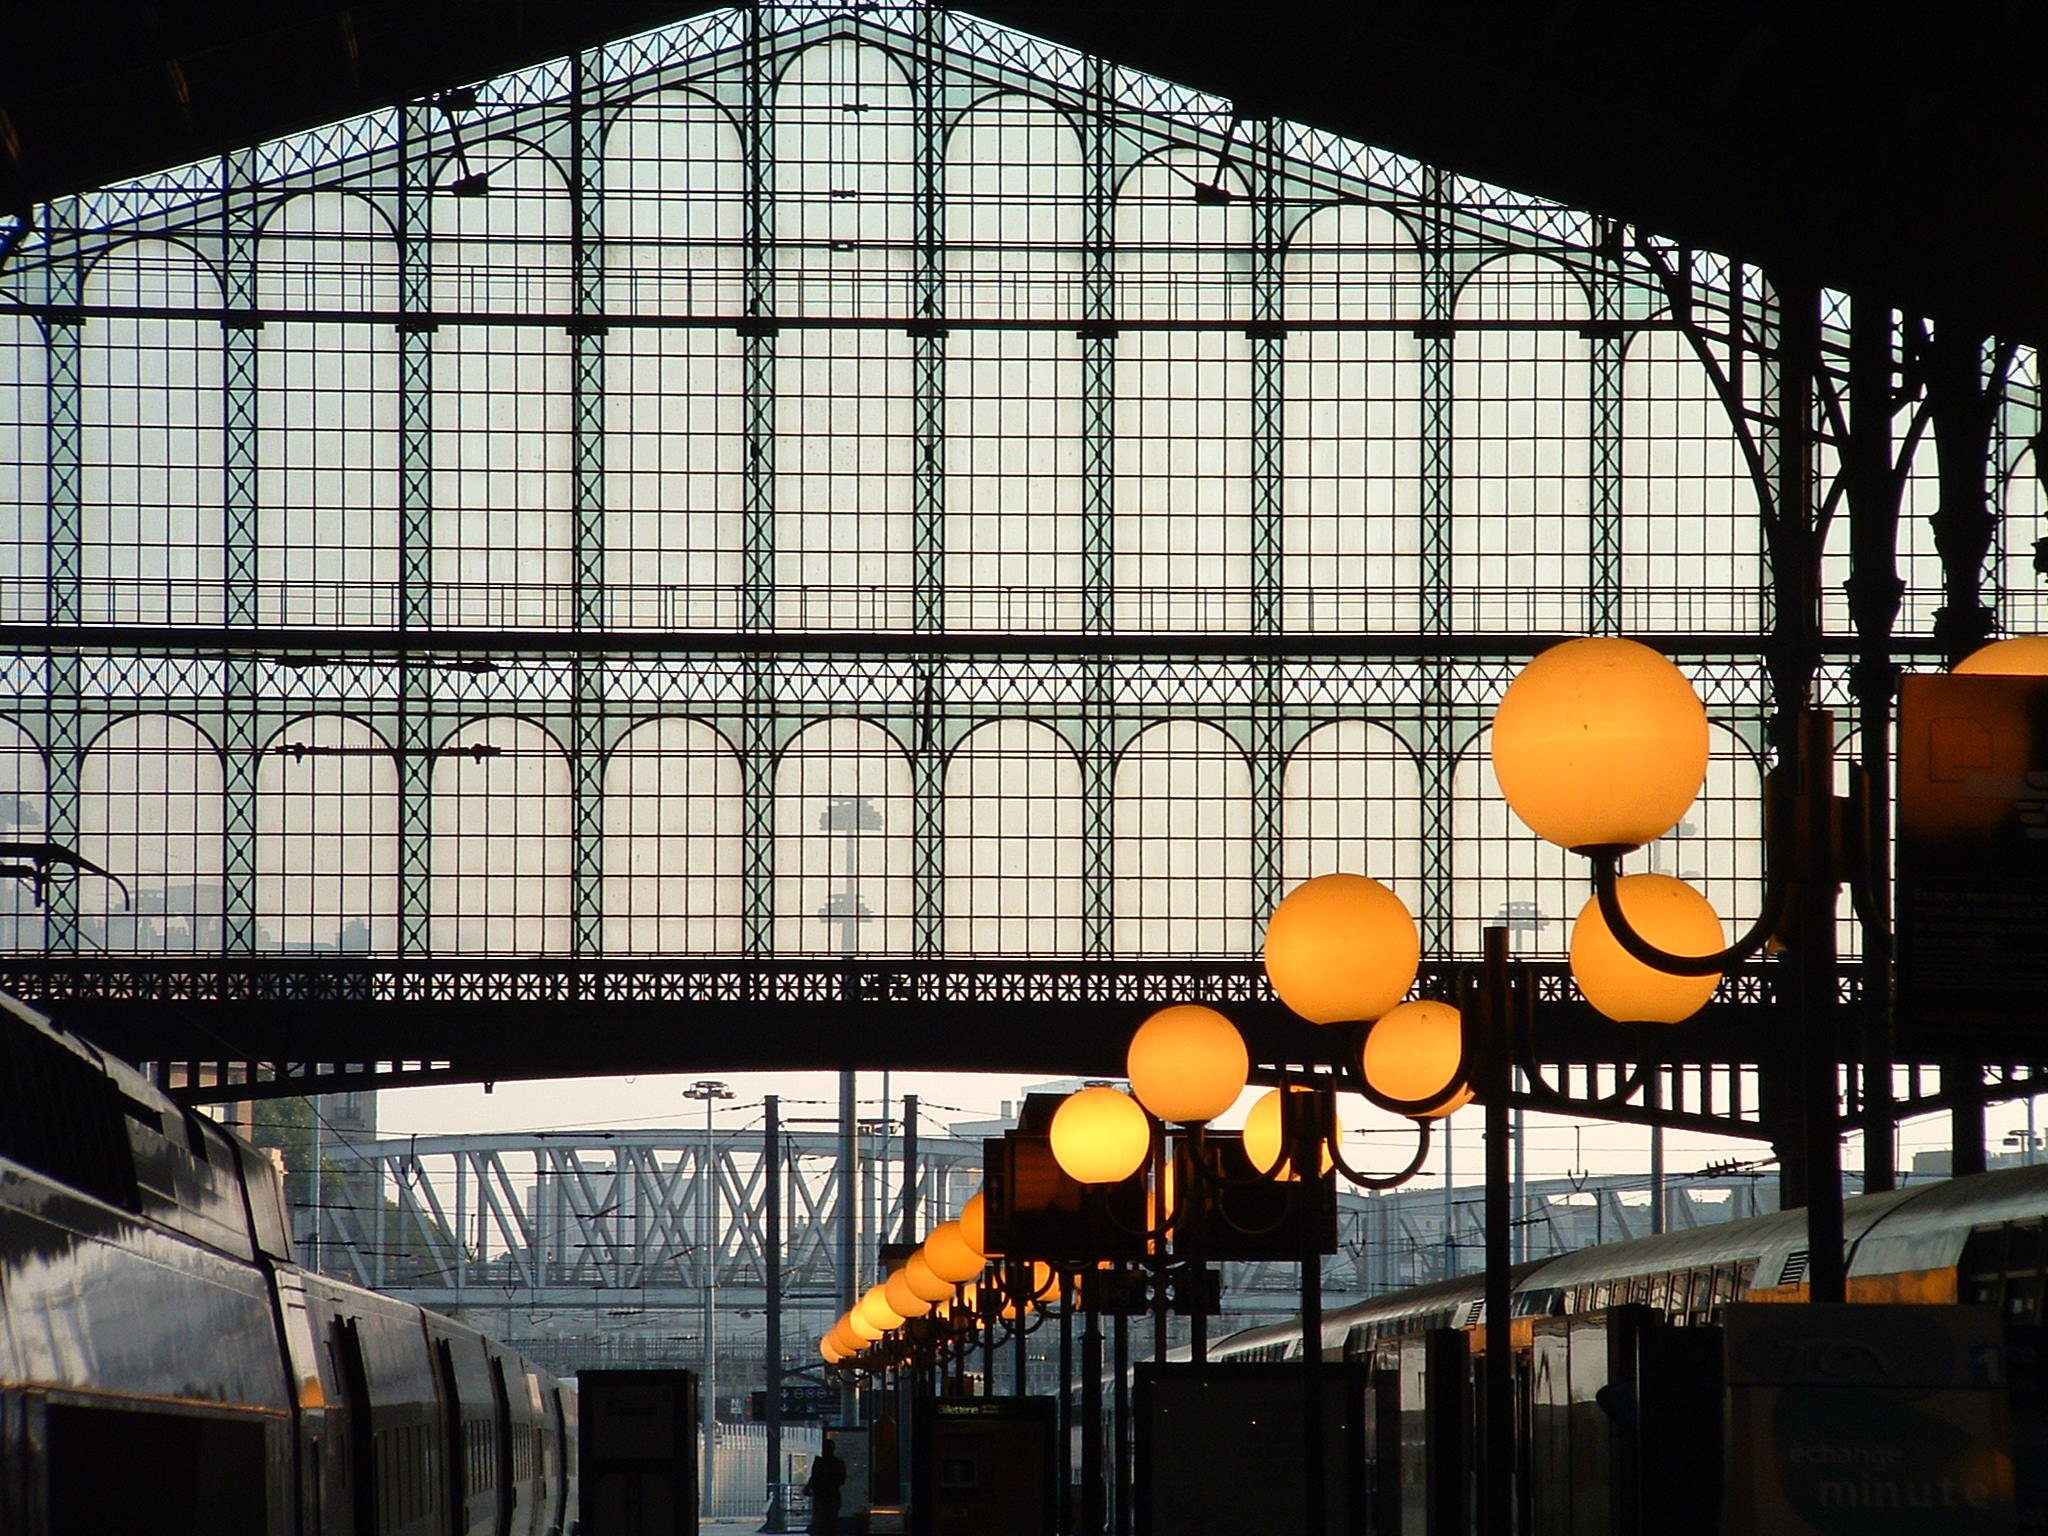 https://blog.geolocaux.com/wp-content/uploads/2015/07/Gare-du-Nord.jpg